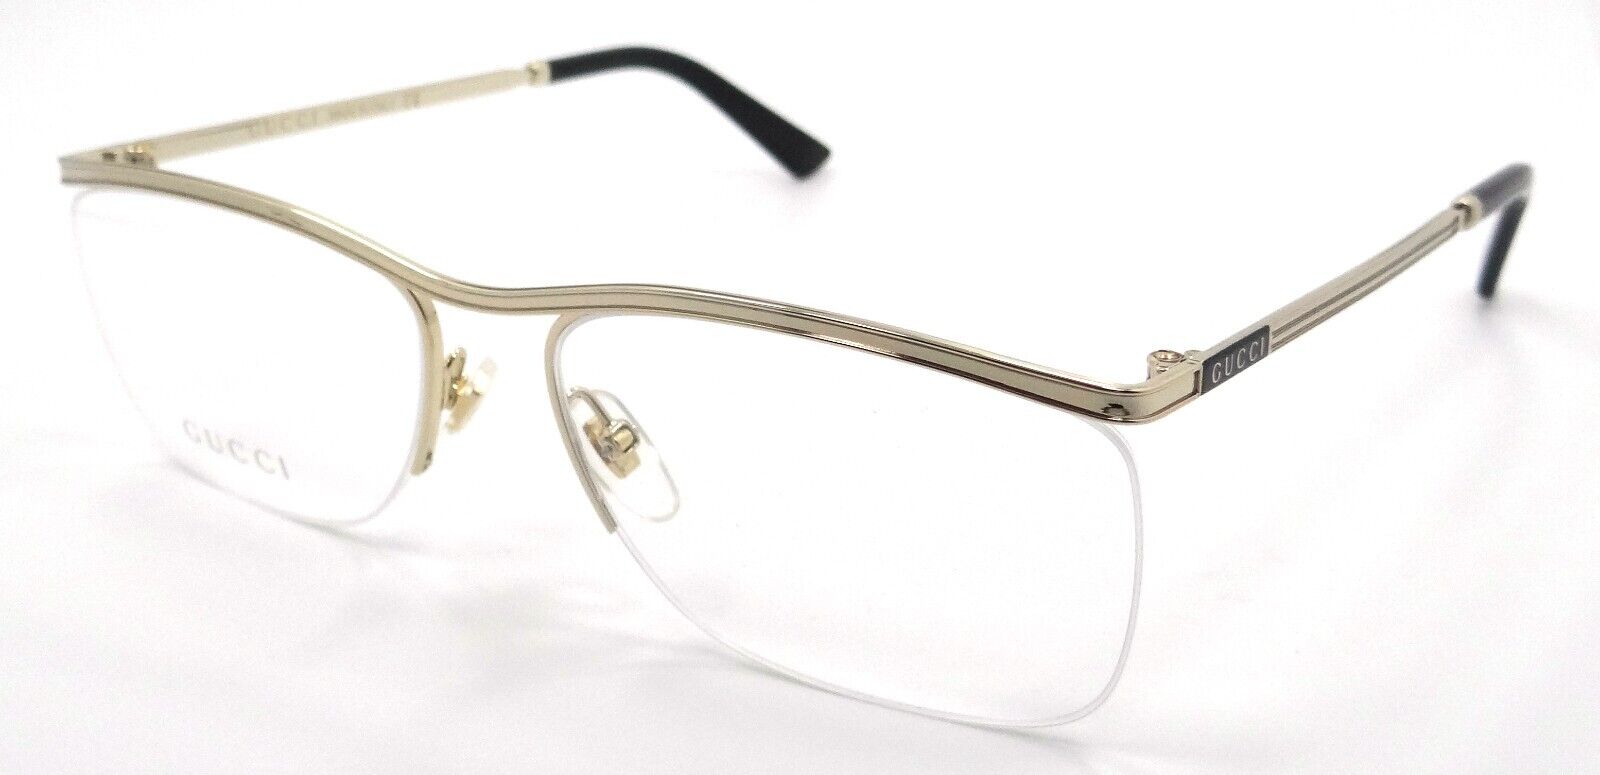 Gucci Eyeglasses Frames GG0823O 001 57-17-145 Gold Made in Italy-889652310718-classypw.com-1